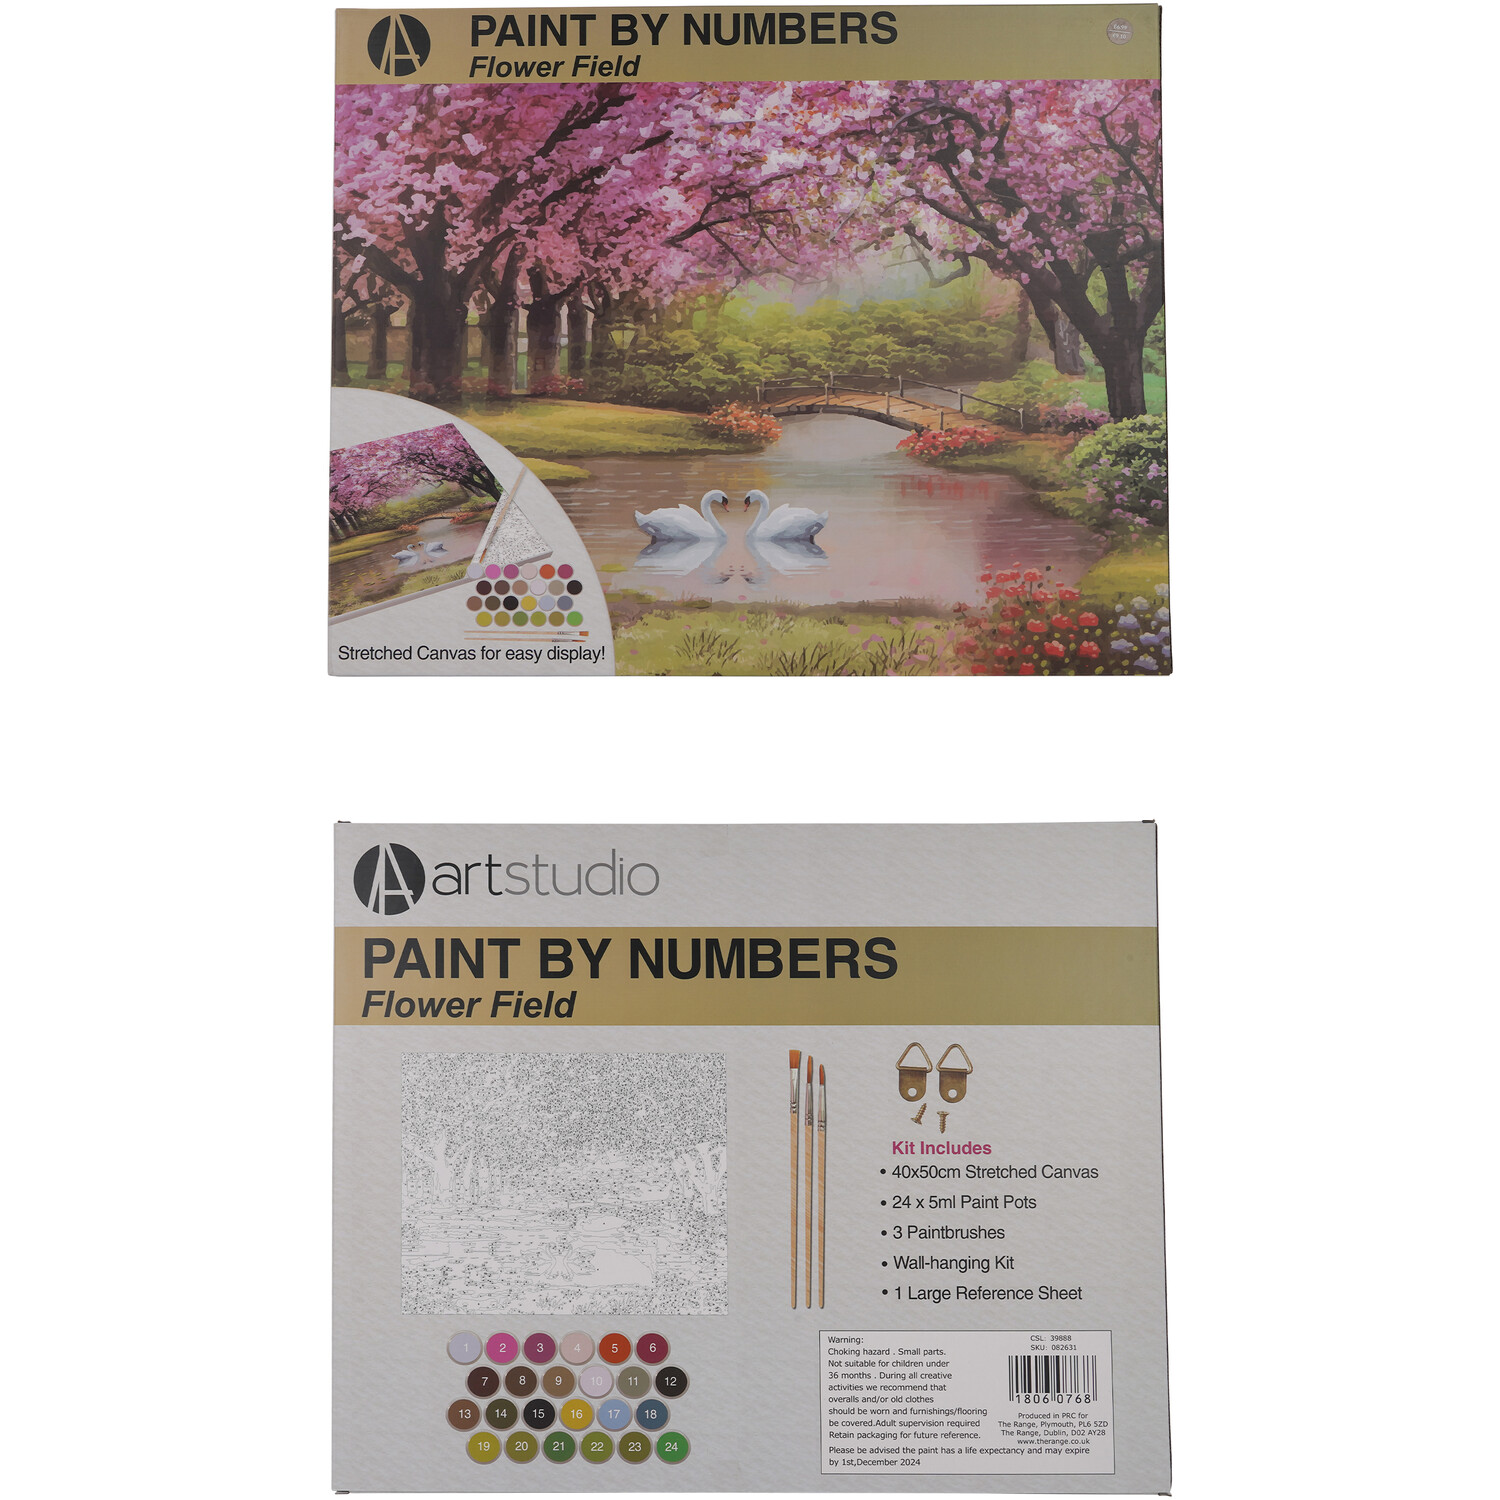 Art Studio Paint by Numbers - Flower Field Image 2